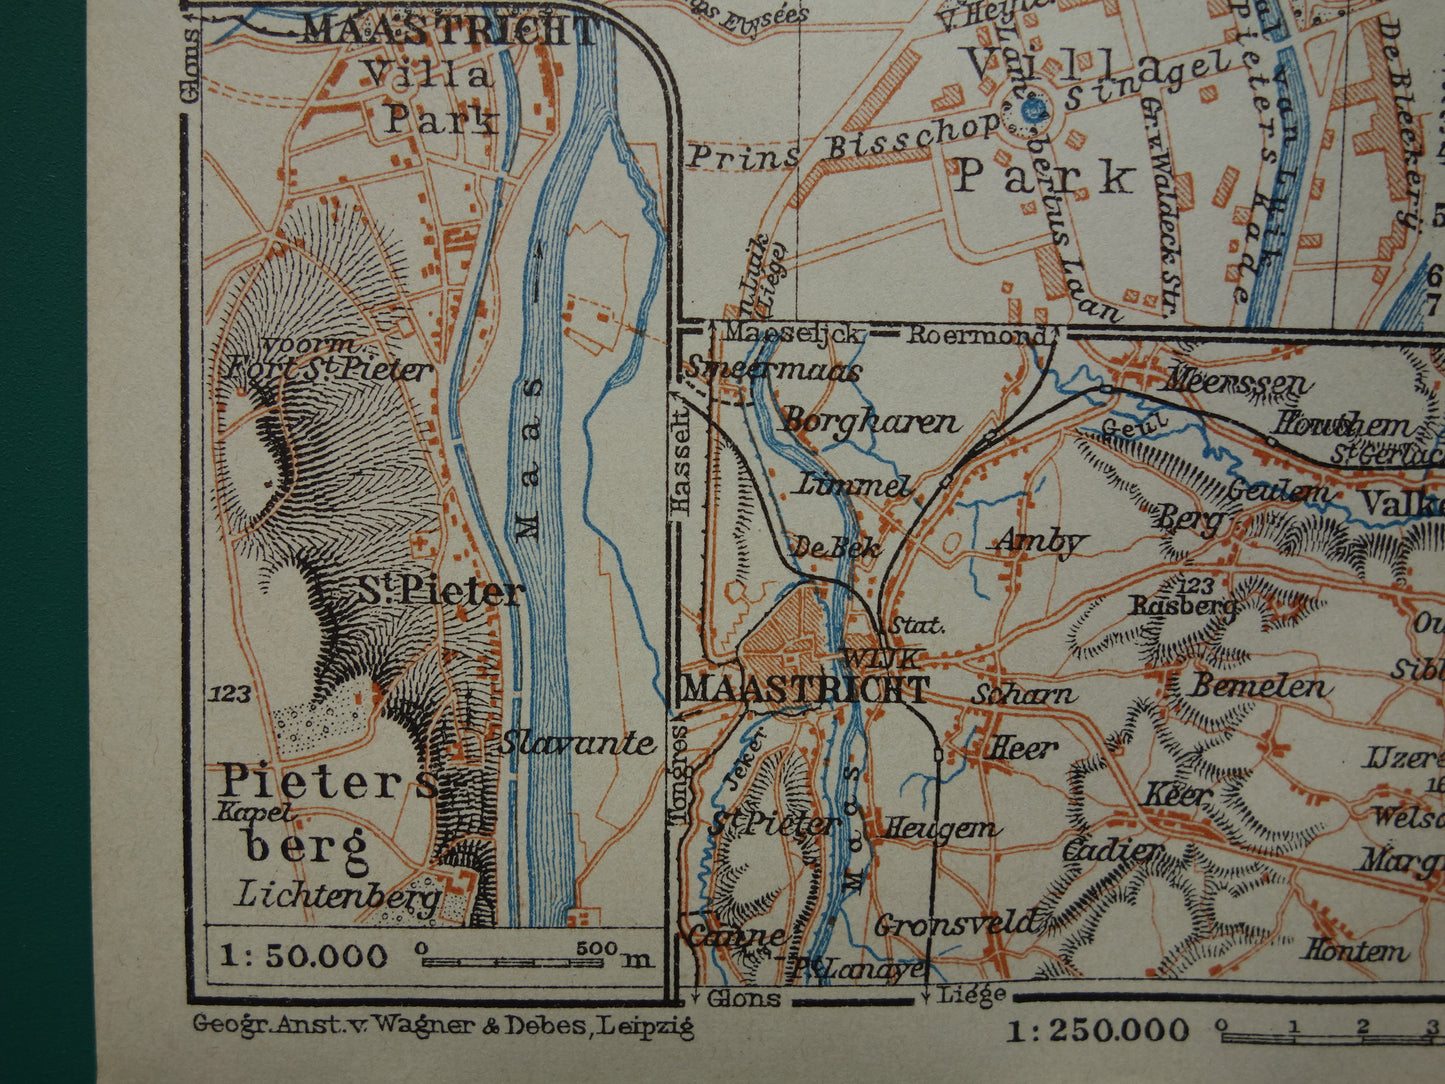 MAASTRICHT oude kaart van Maastricht en Sint-Pietersberg uit 1910 kleine originele antieke plattegrond landkaart